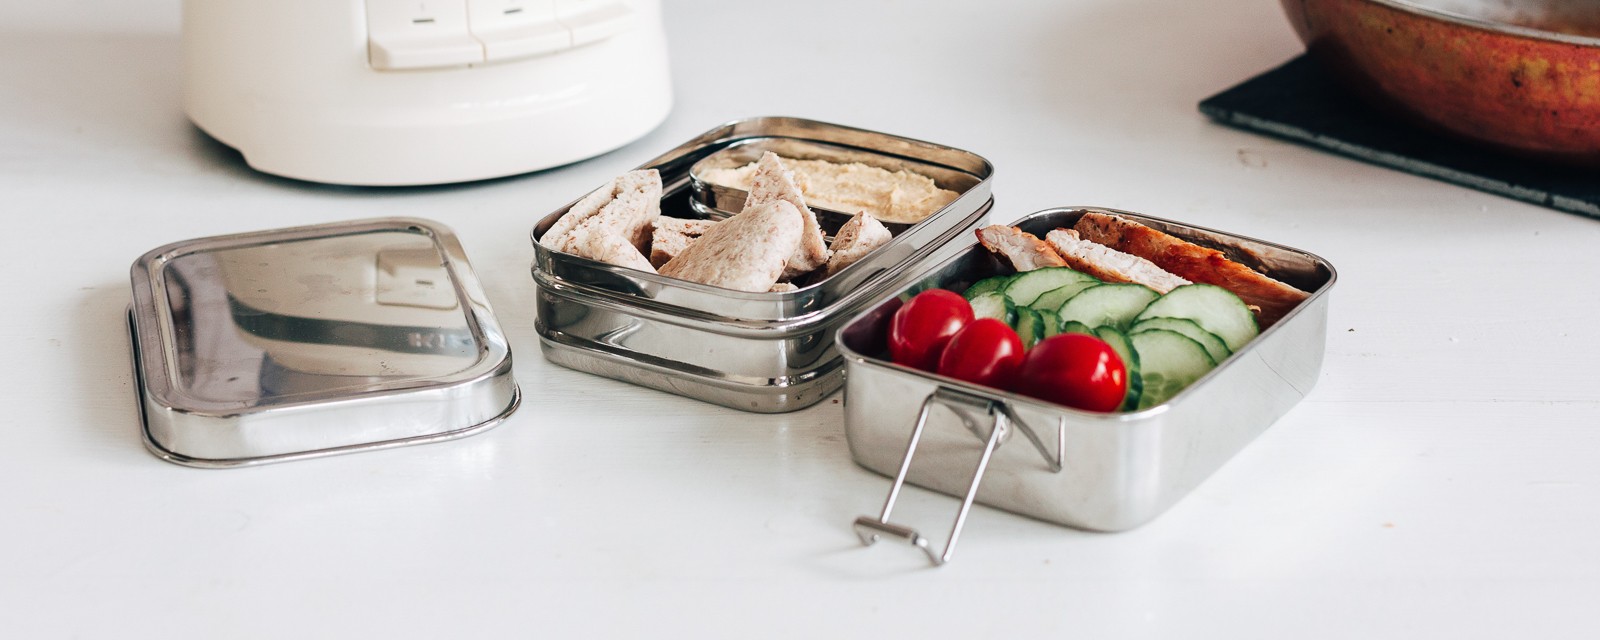 Import-Recipe - Bento box: quick hummus with chicken, pita breads and veggies